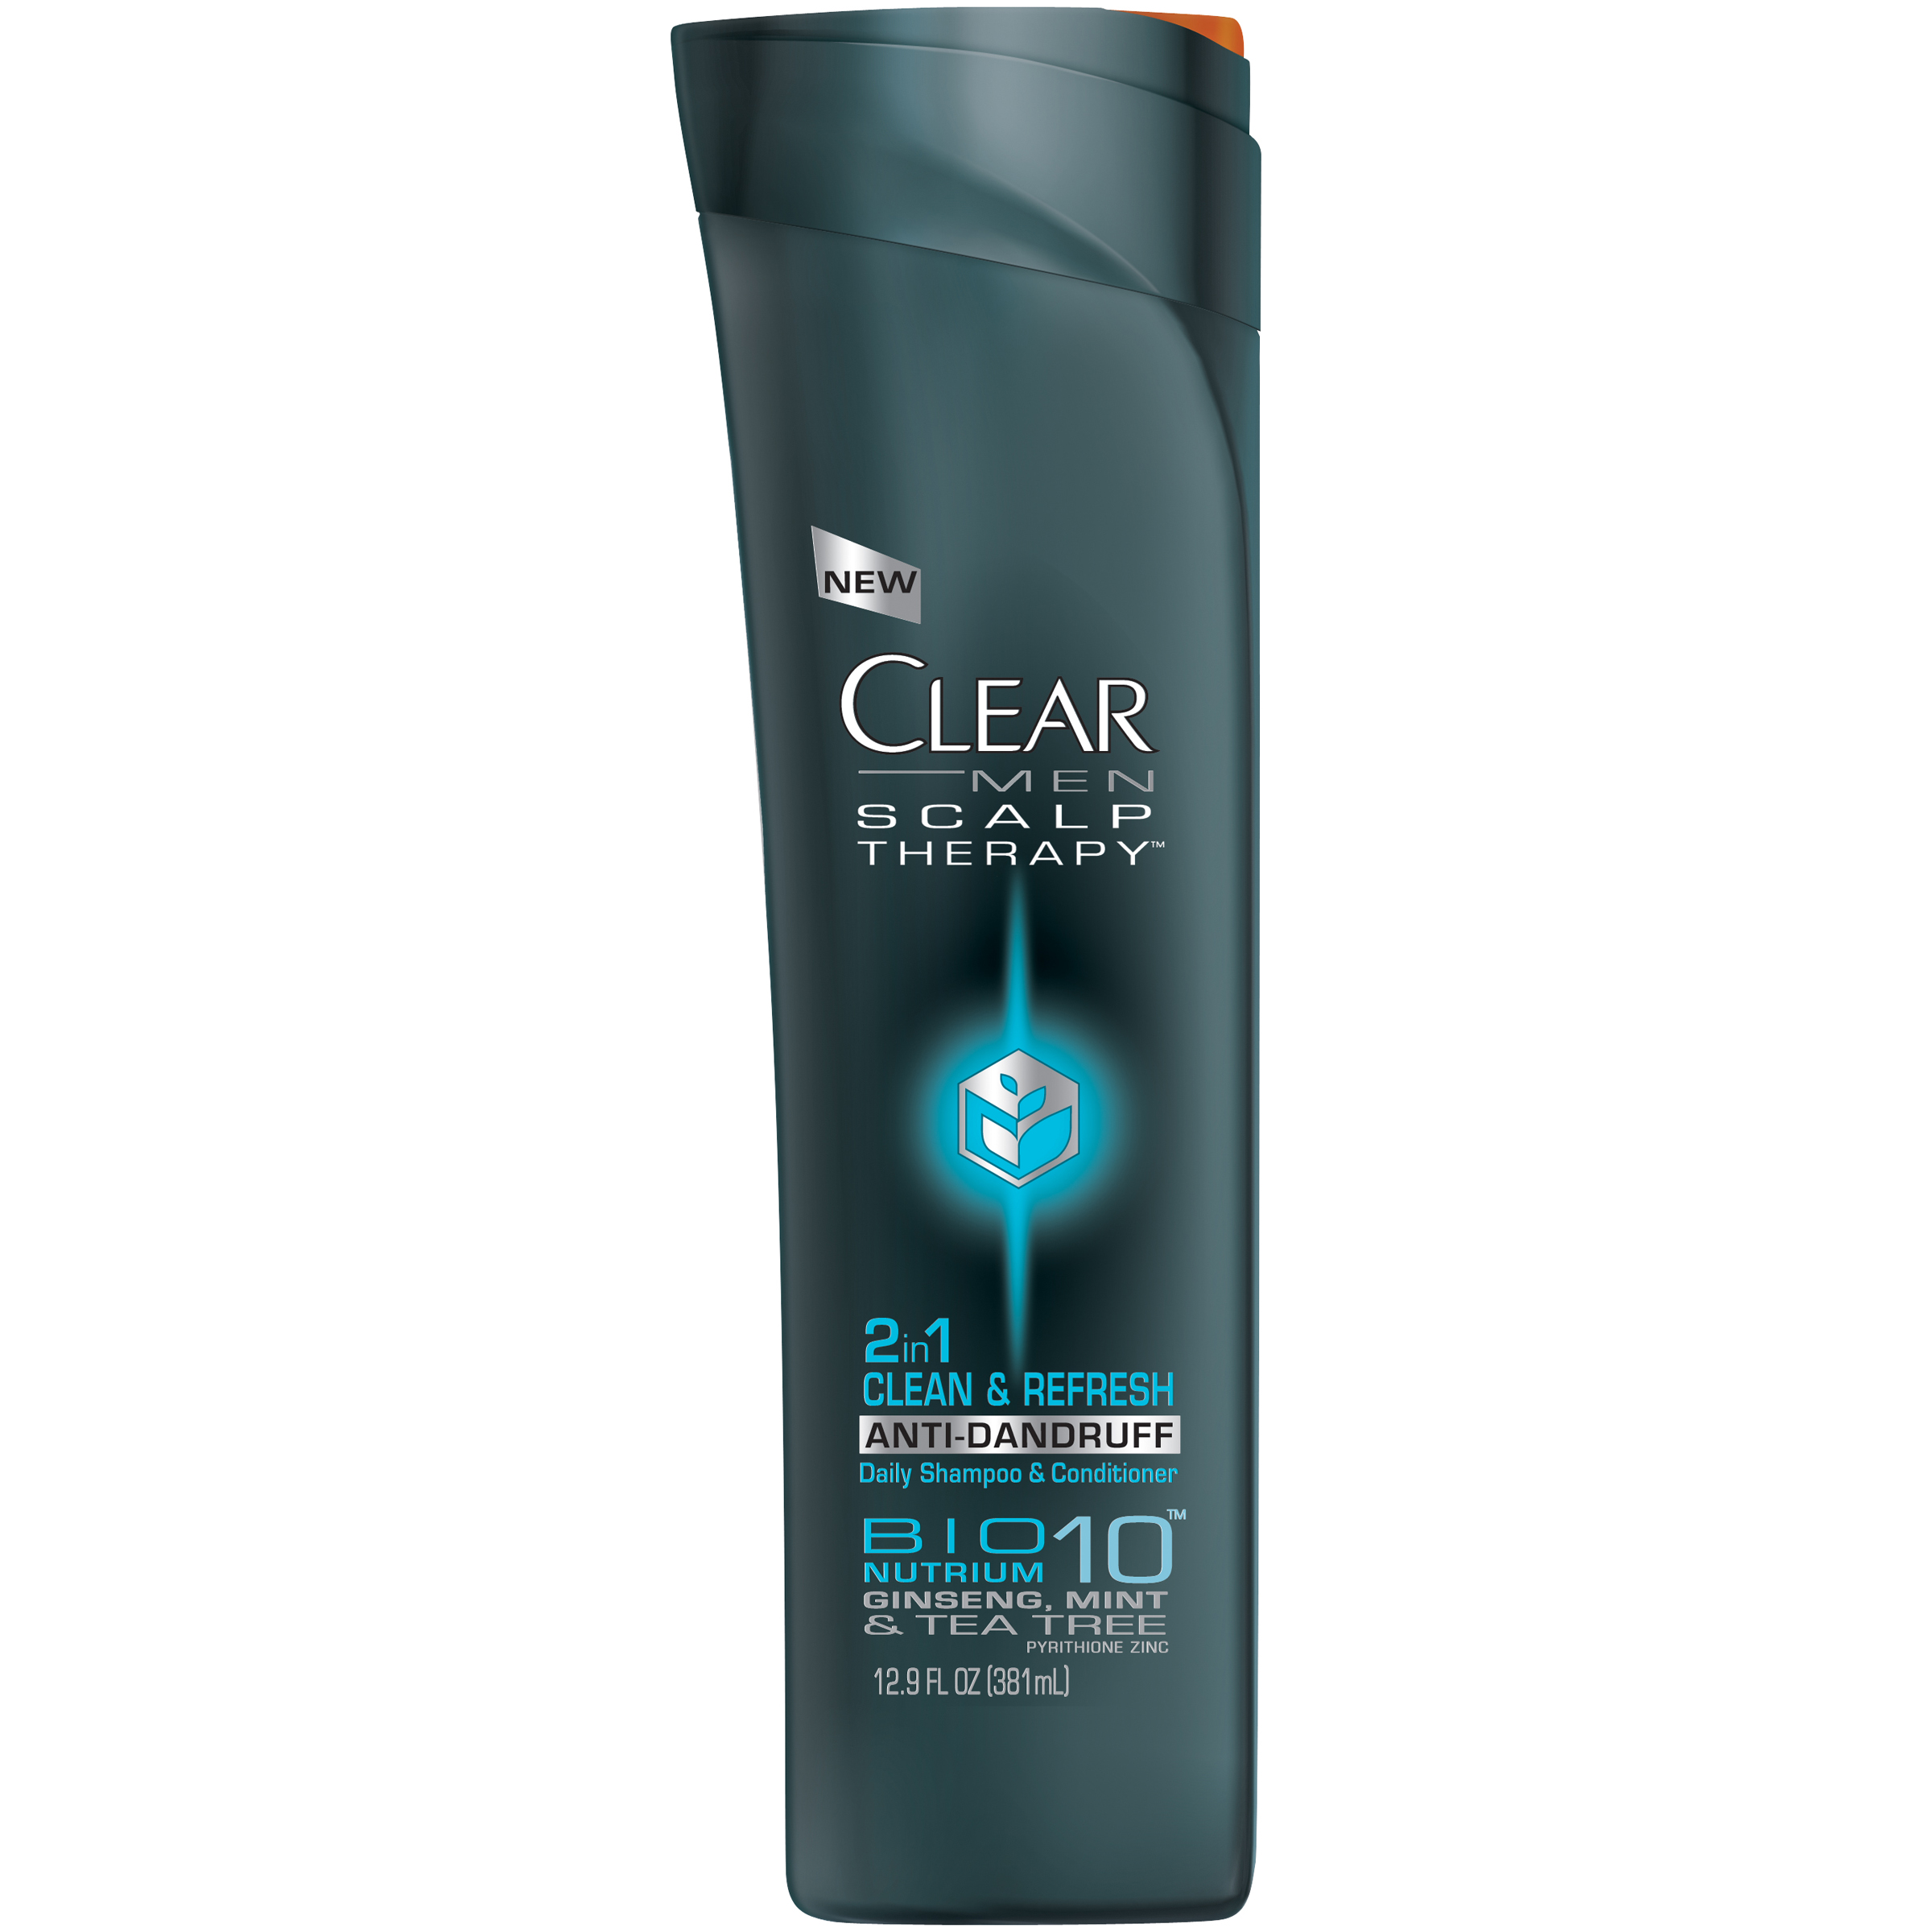 Clear Men Scalp Therapy Shampoo & Conditioner Daily Anti-Dandruff 2 in 1 Clean & Refresh 12.9 fl oz (381 ml)